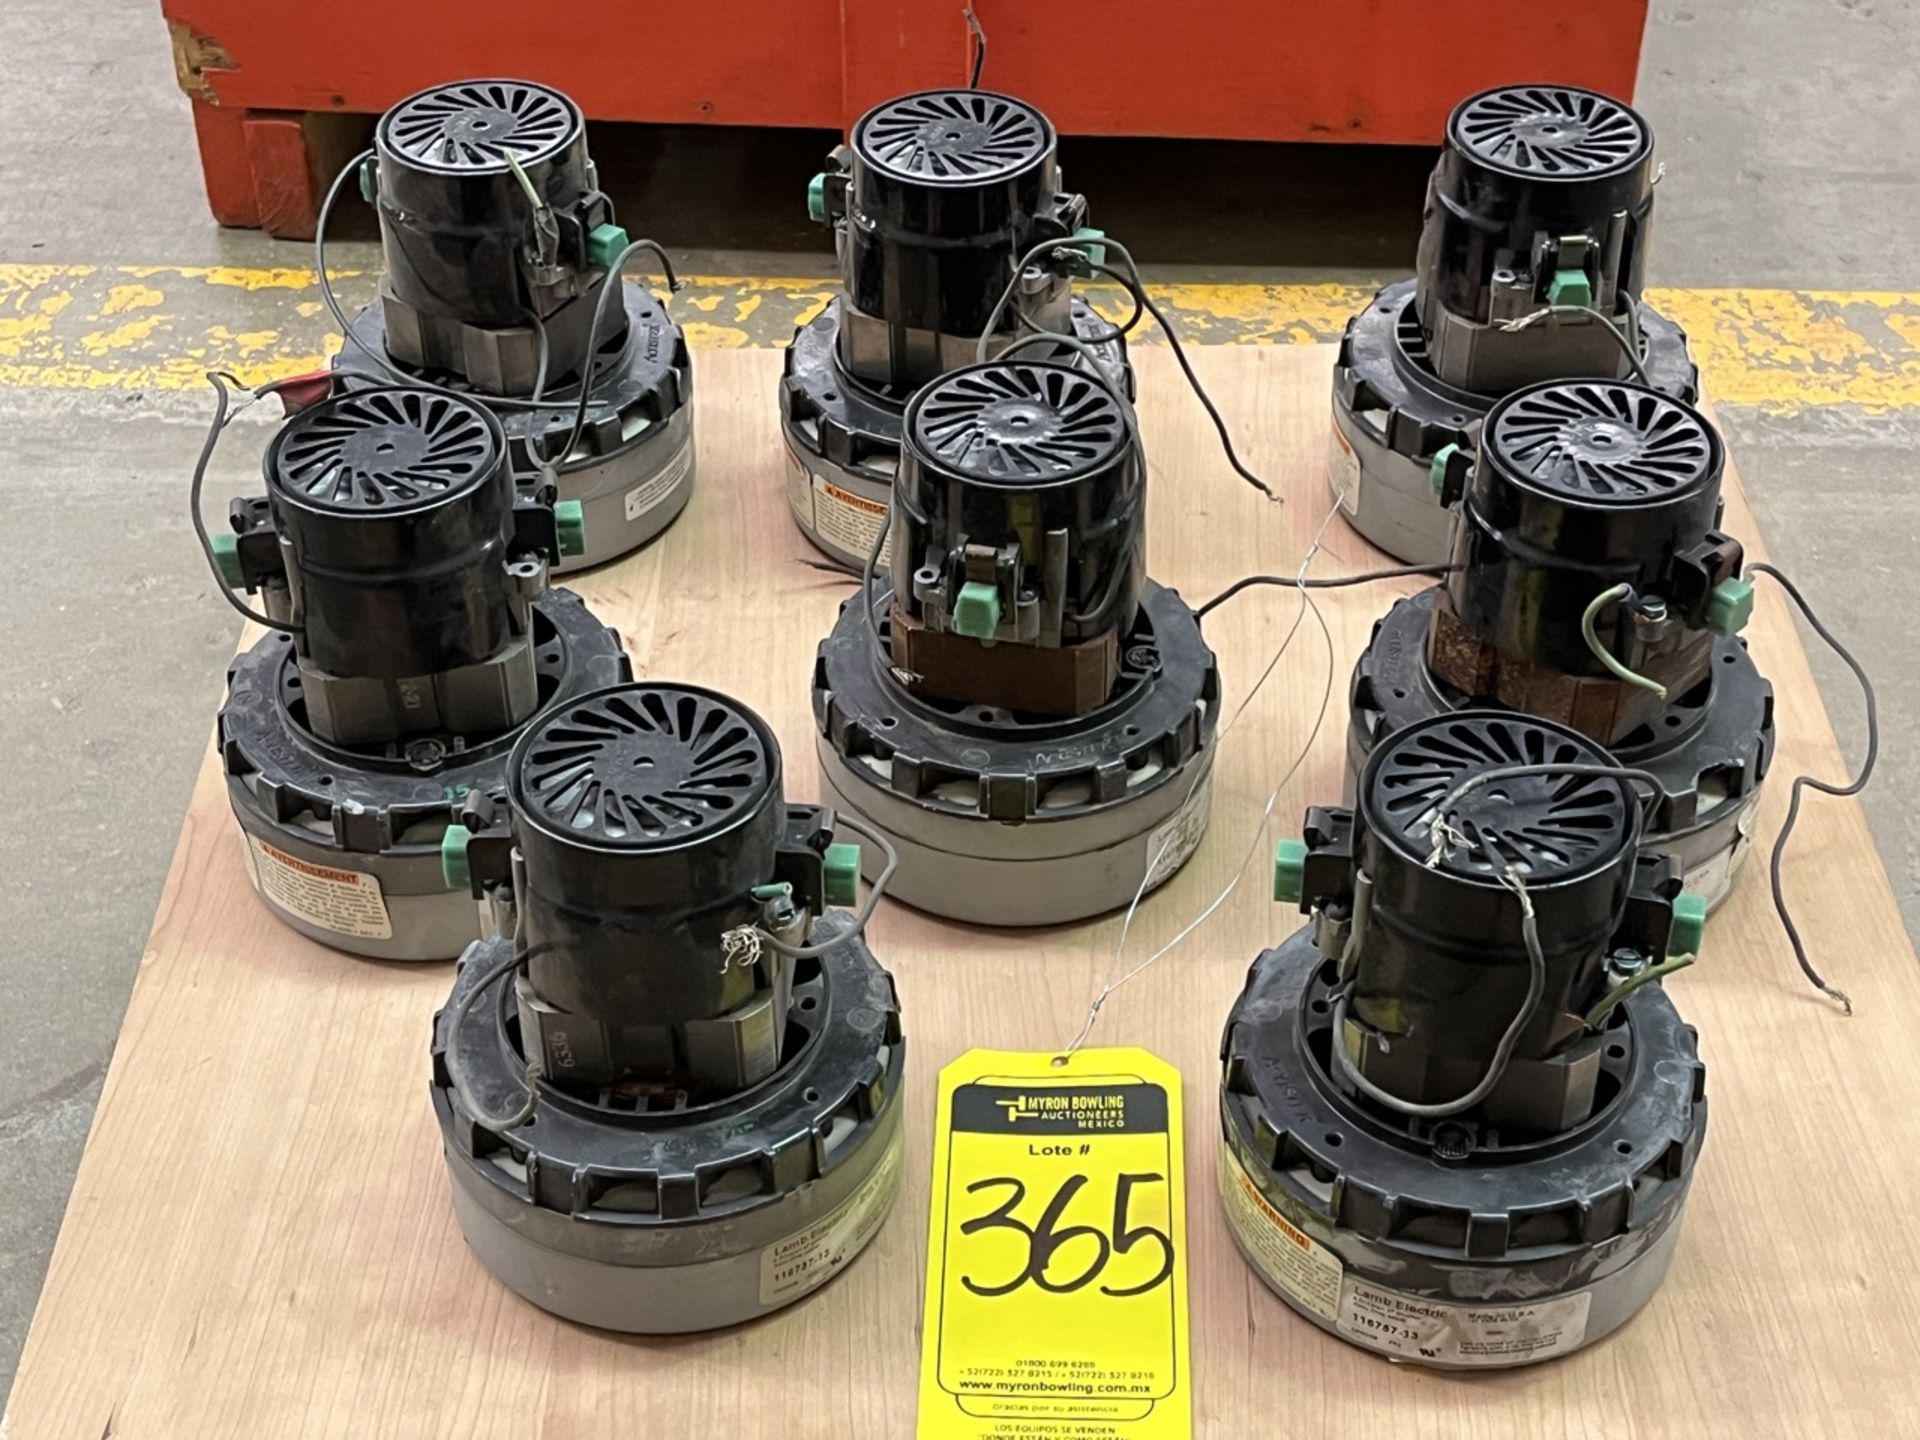 8 Ametek vacuum motors, Model 116757-13, 120V. / 8 Motores de vacio marca Ametek, Modelo 116757-13,